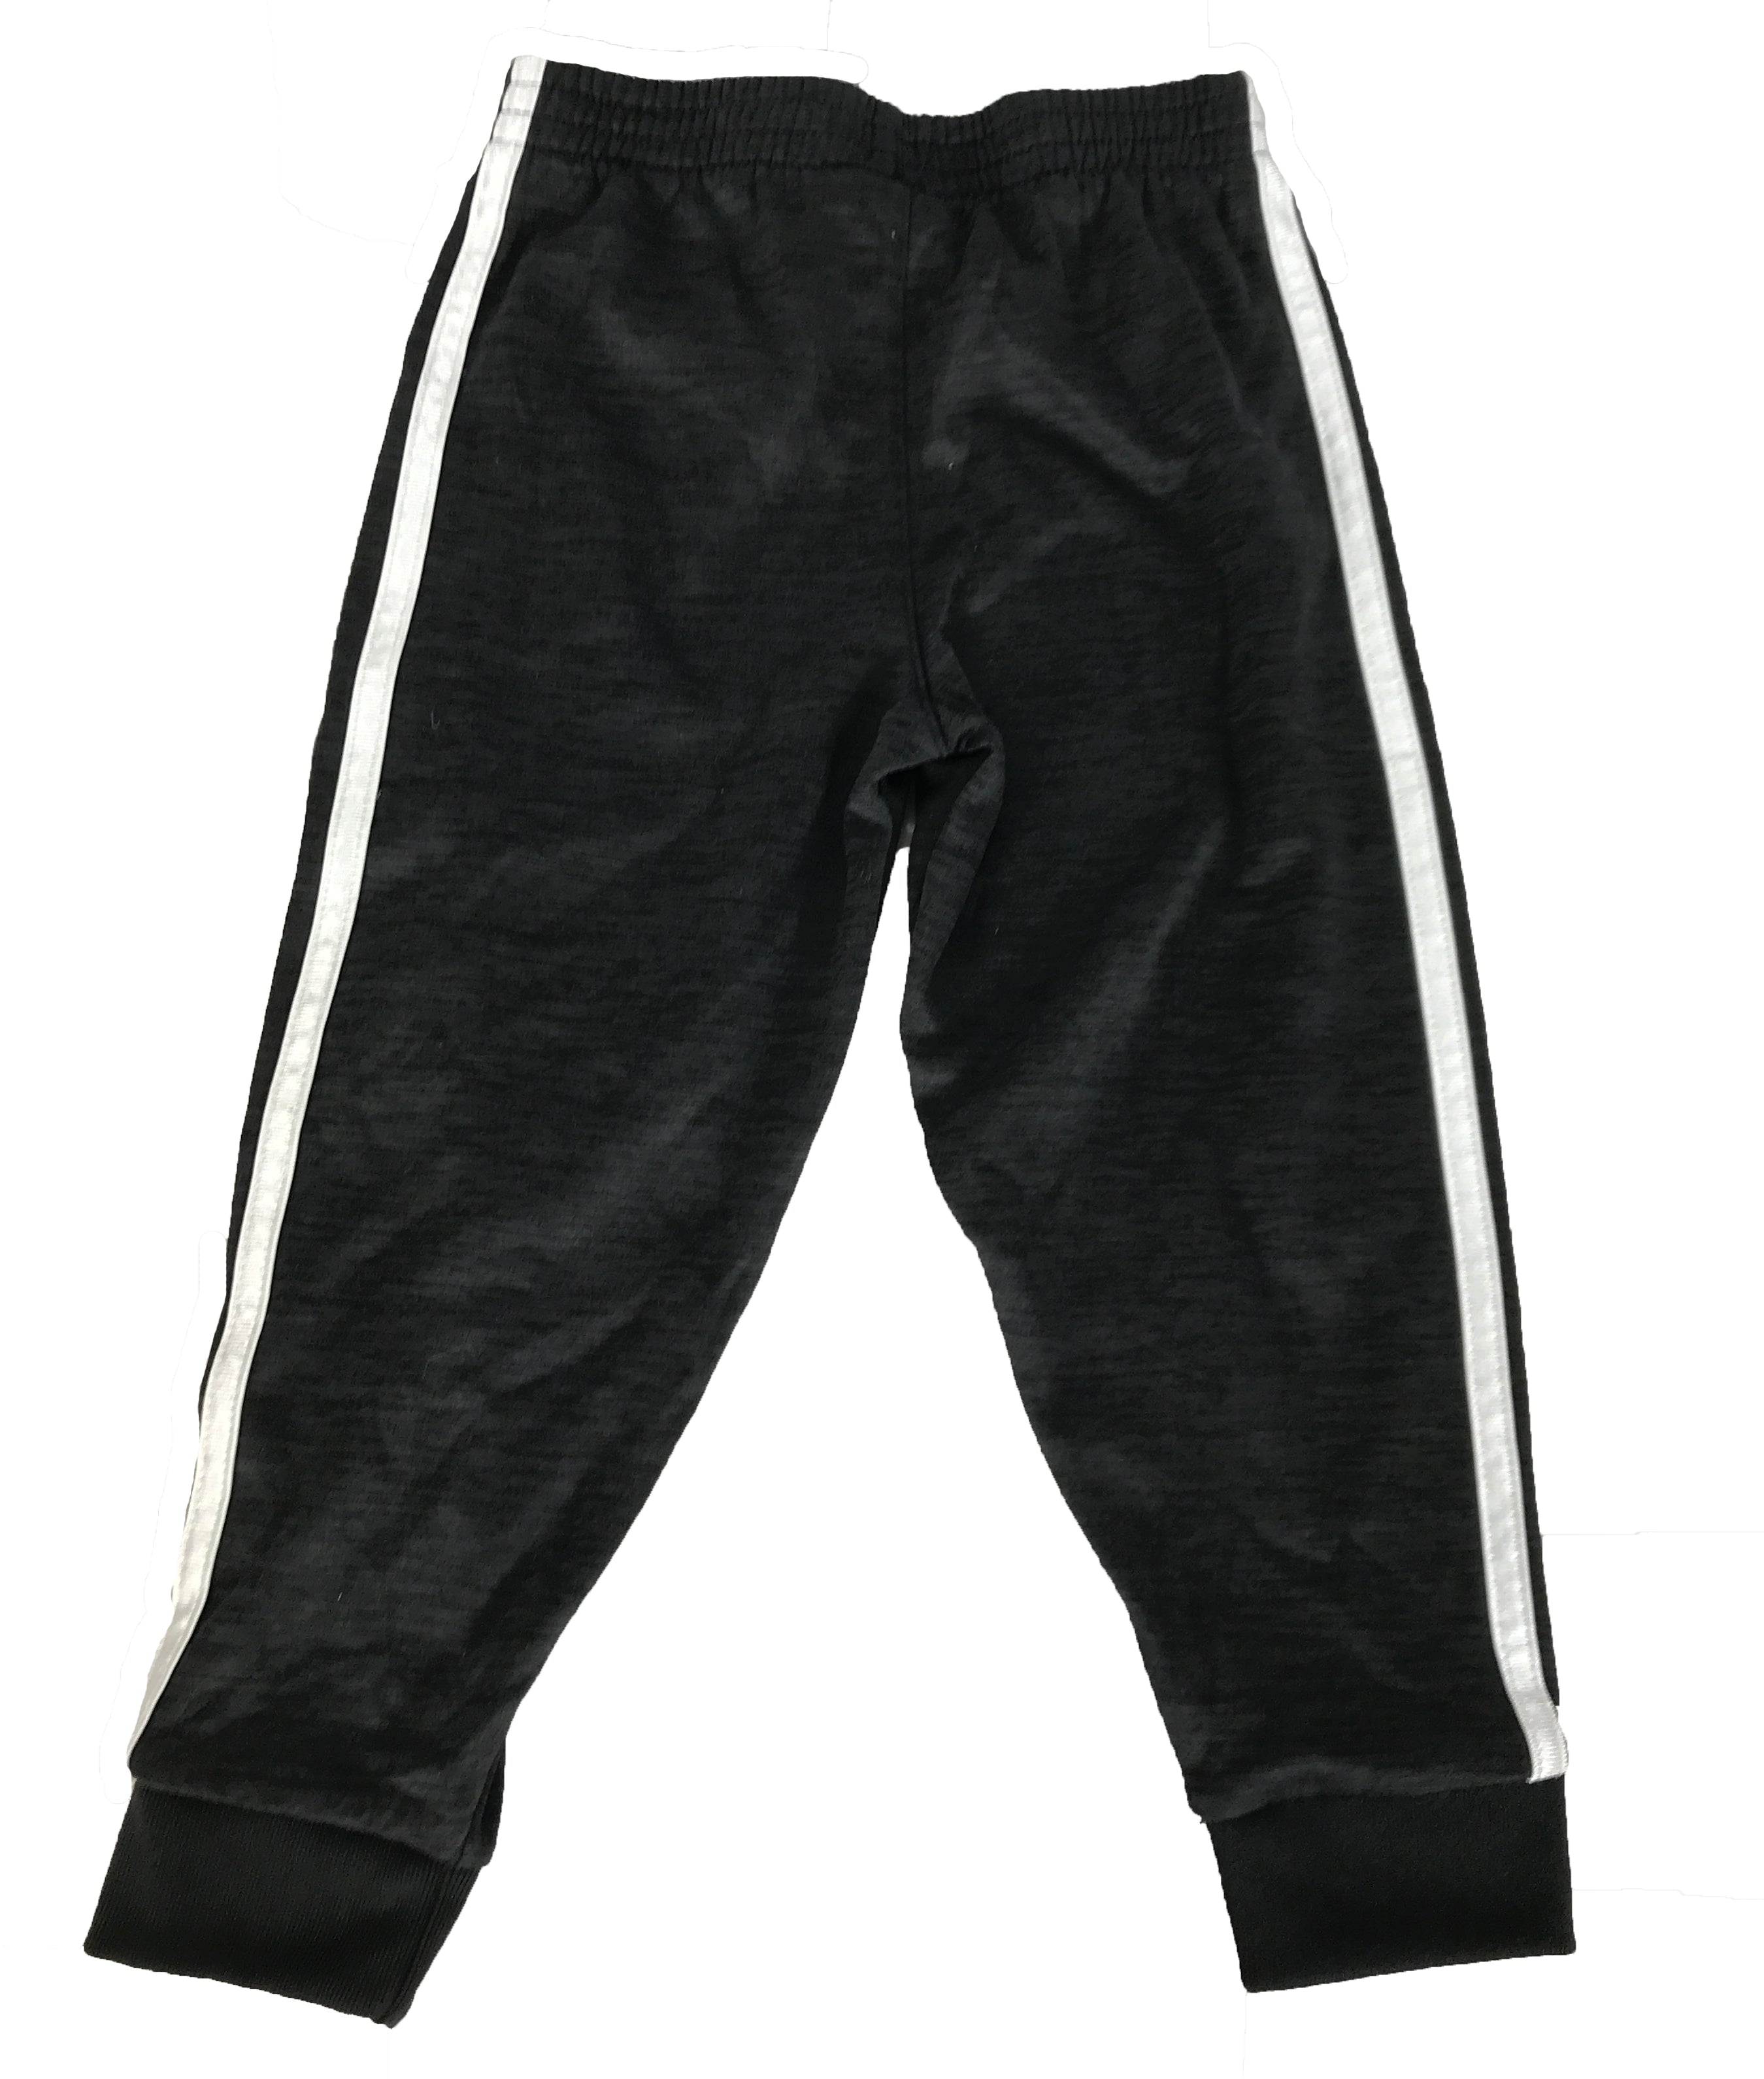 Adidas Gray Sweatpants Kid's Size 4T